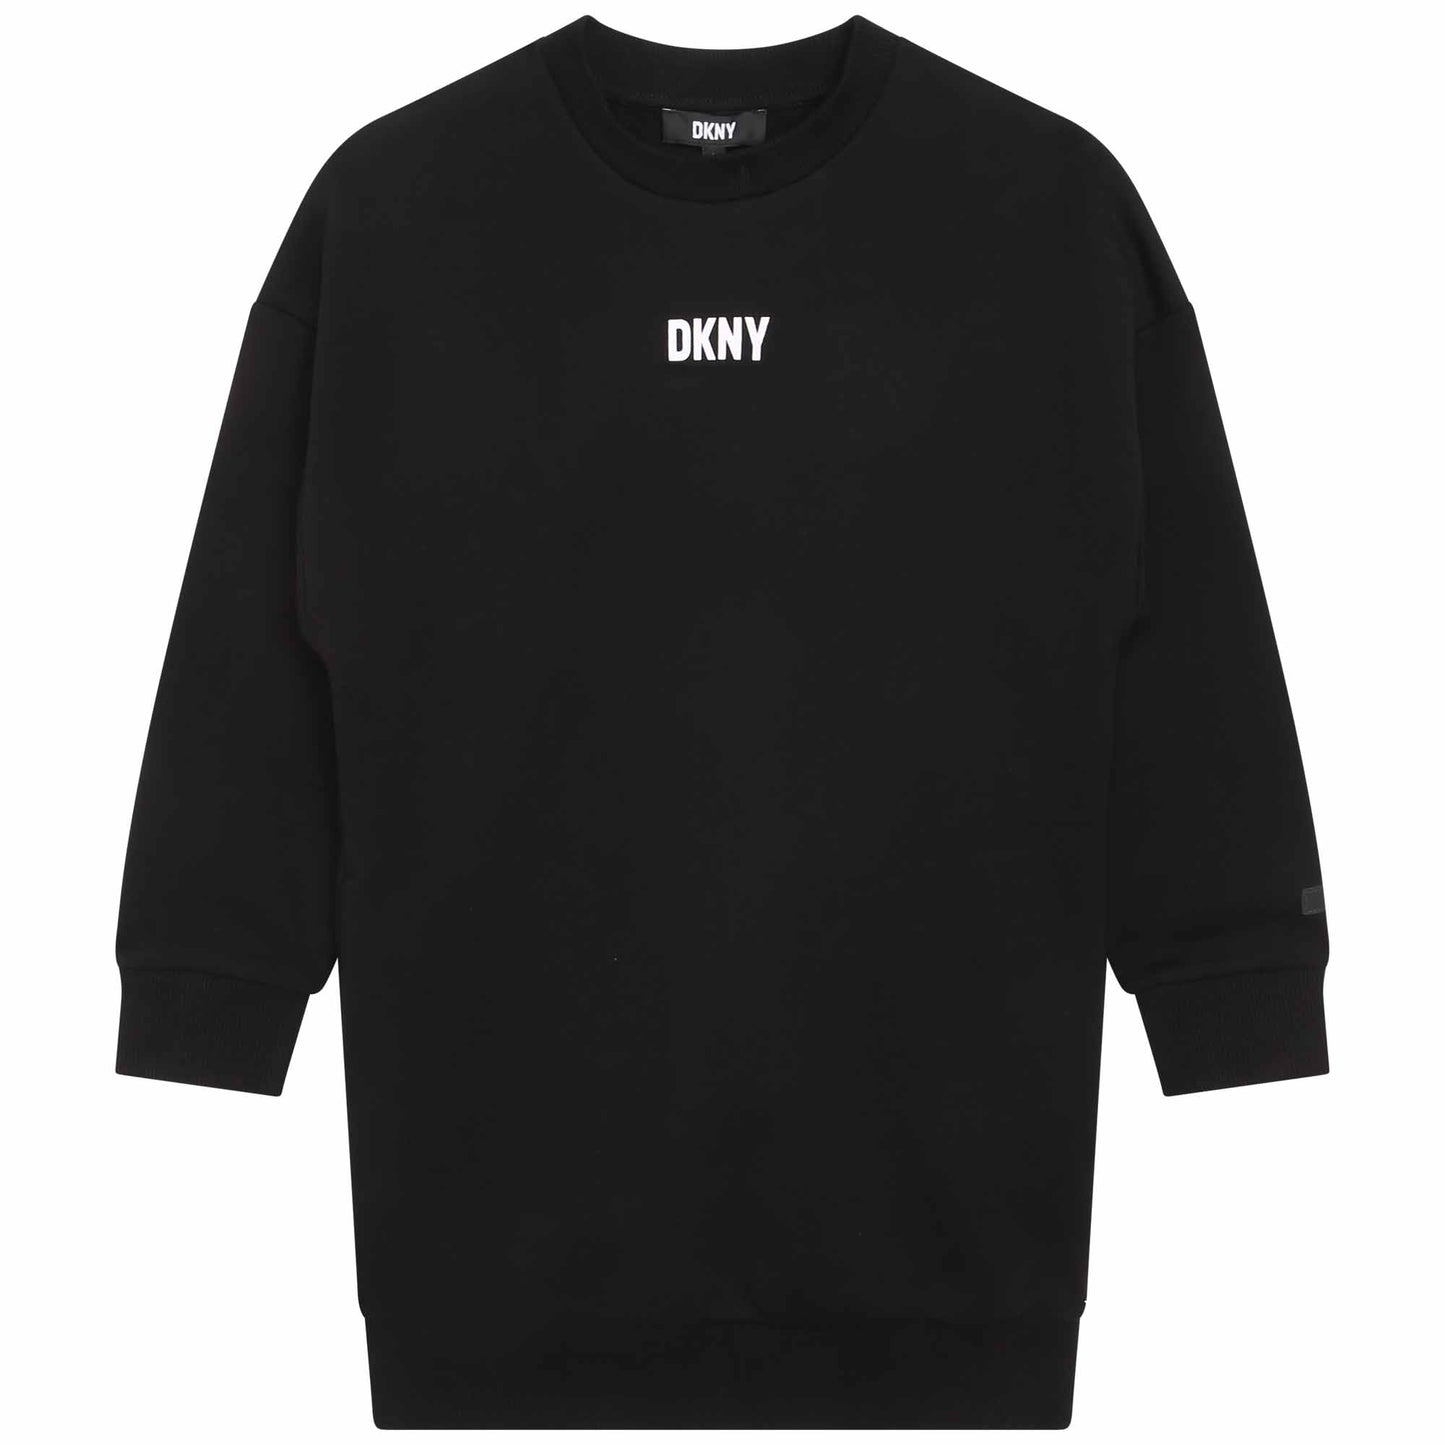 DKNY BLACK LOGO SWEATSHIRT DRESS